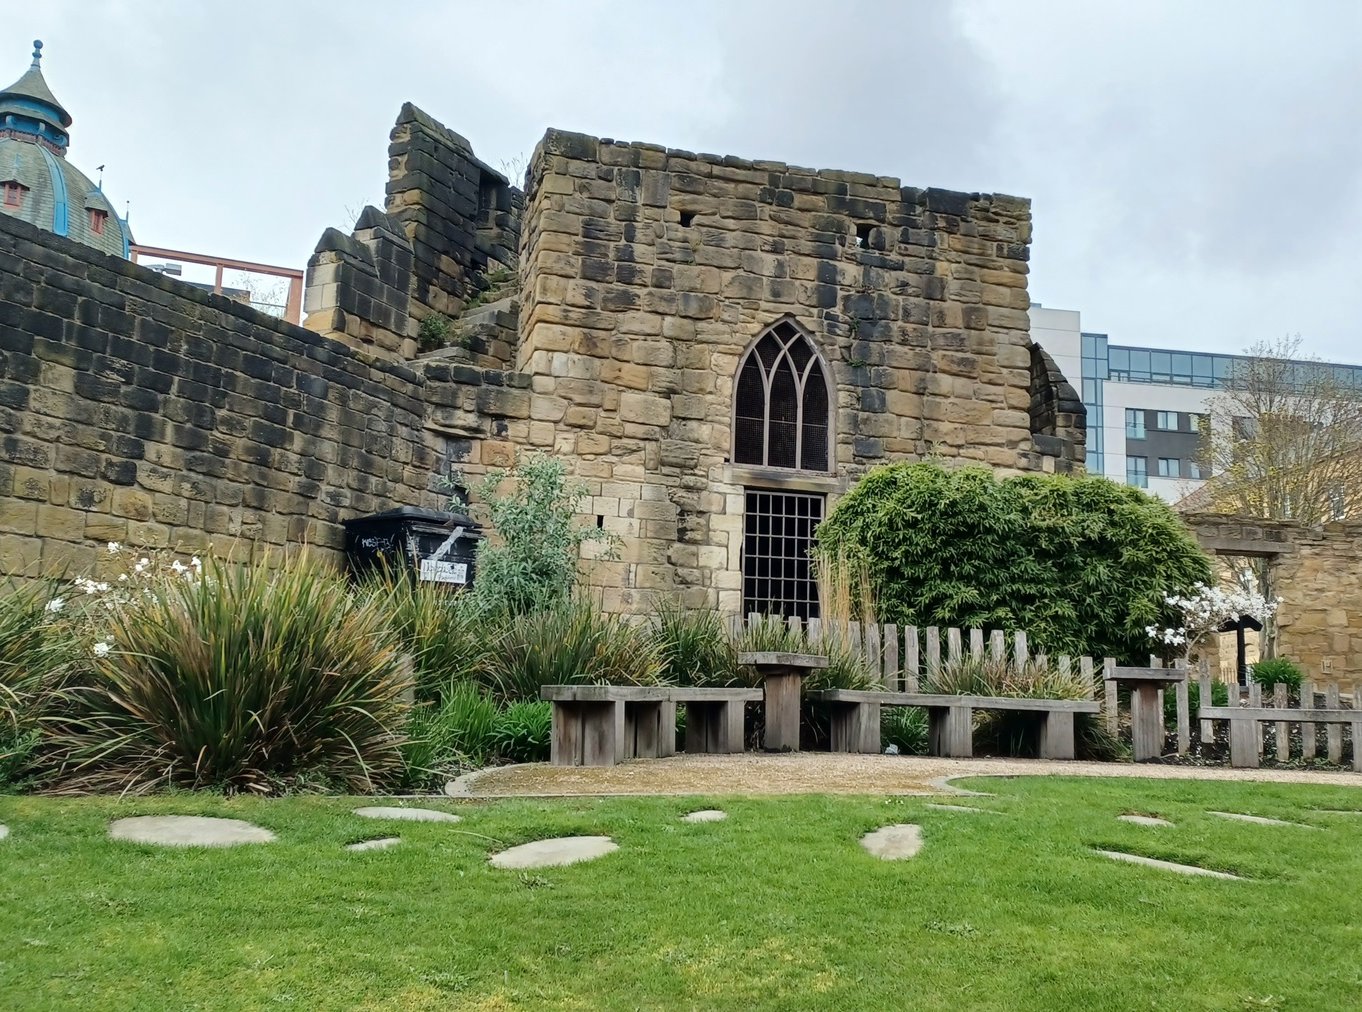 Newcastle City Walls